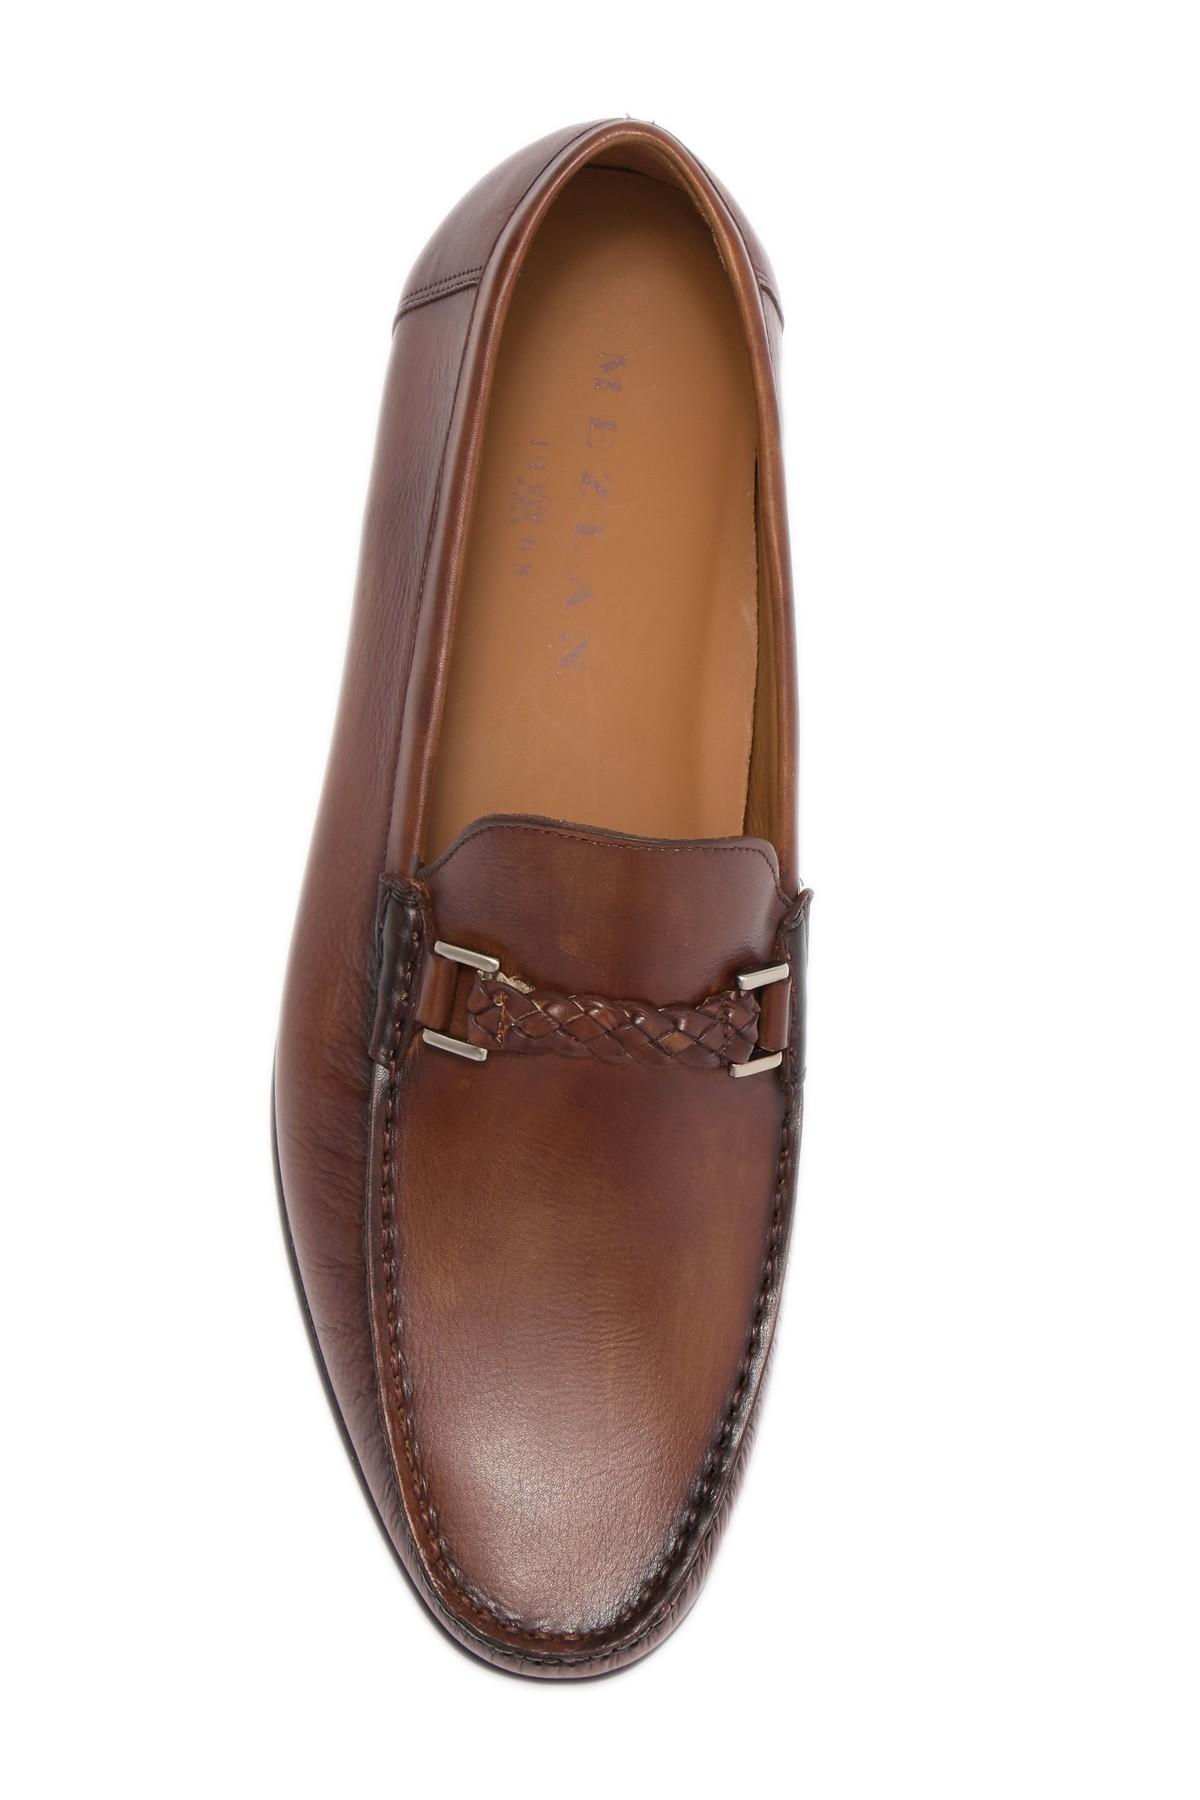 Mezlan Leather Woven Strap Loafer in Cognac (Brown) for Men - Lyst